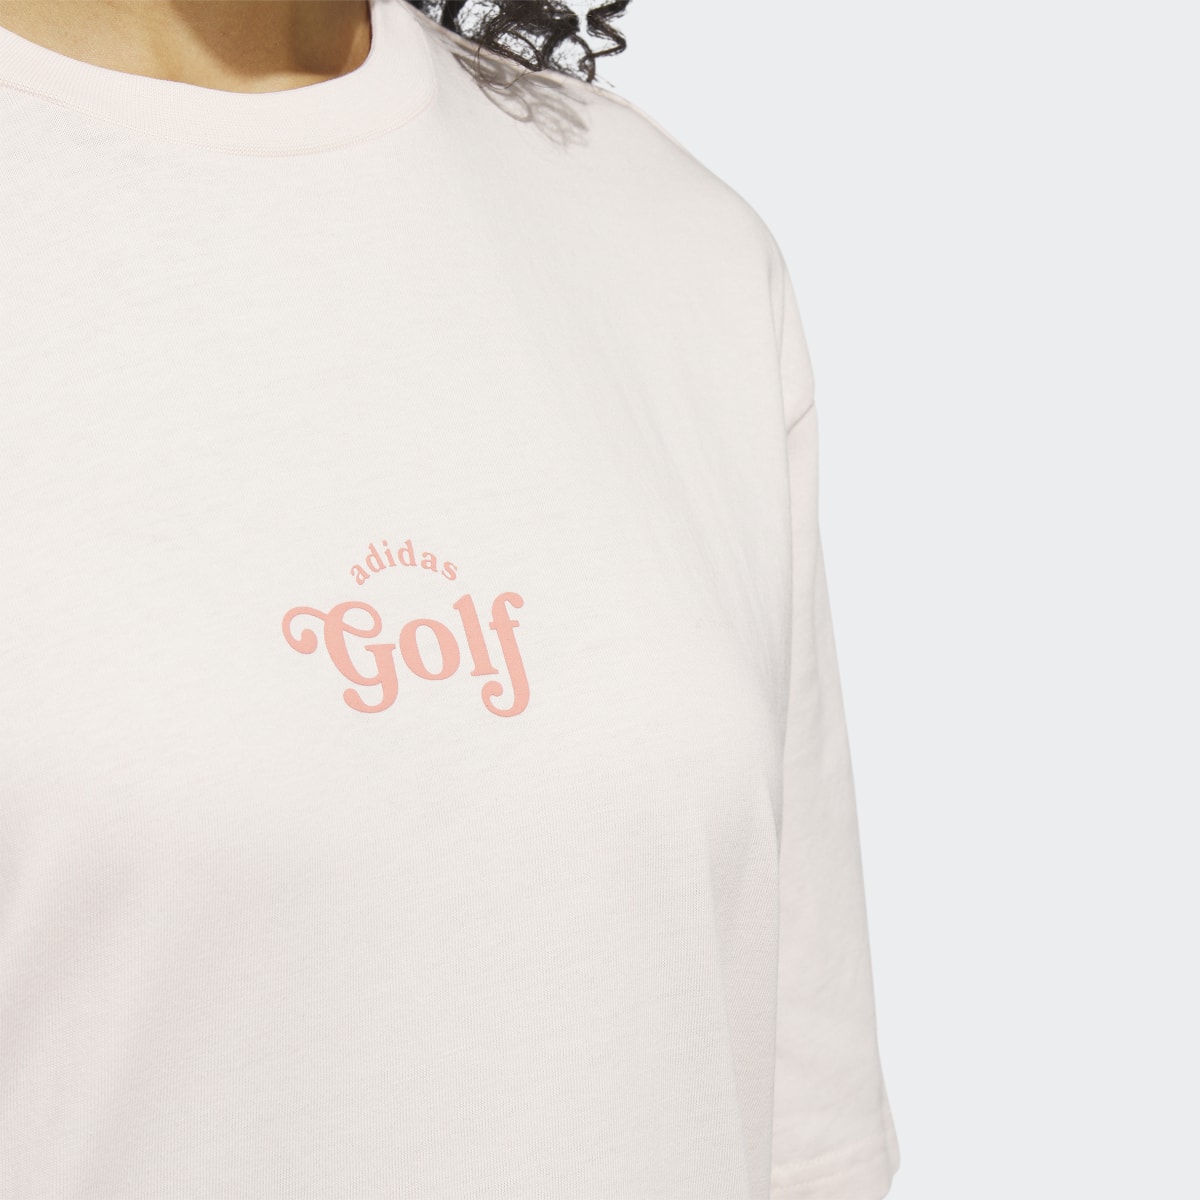 Adidas Golf Graphic T-Shirt. 7